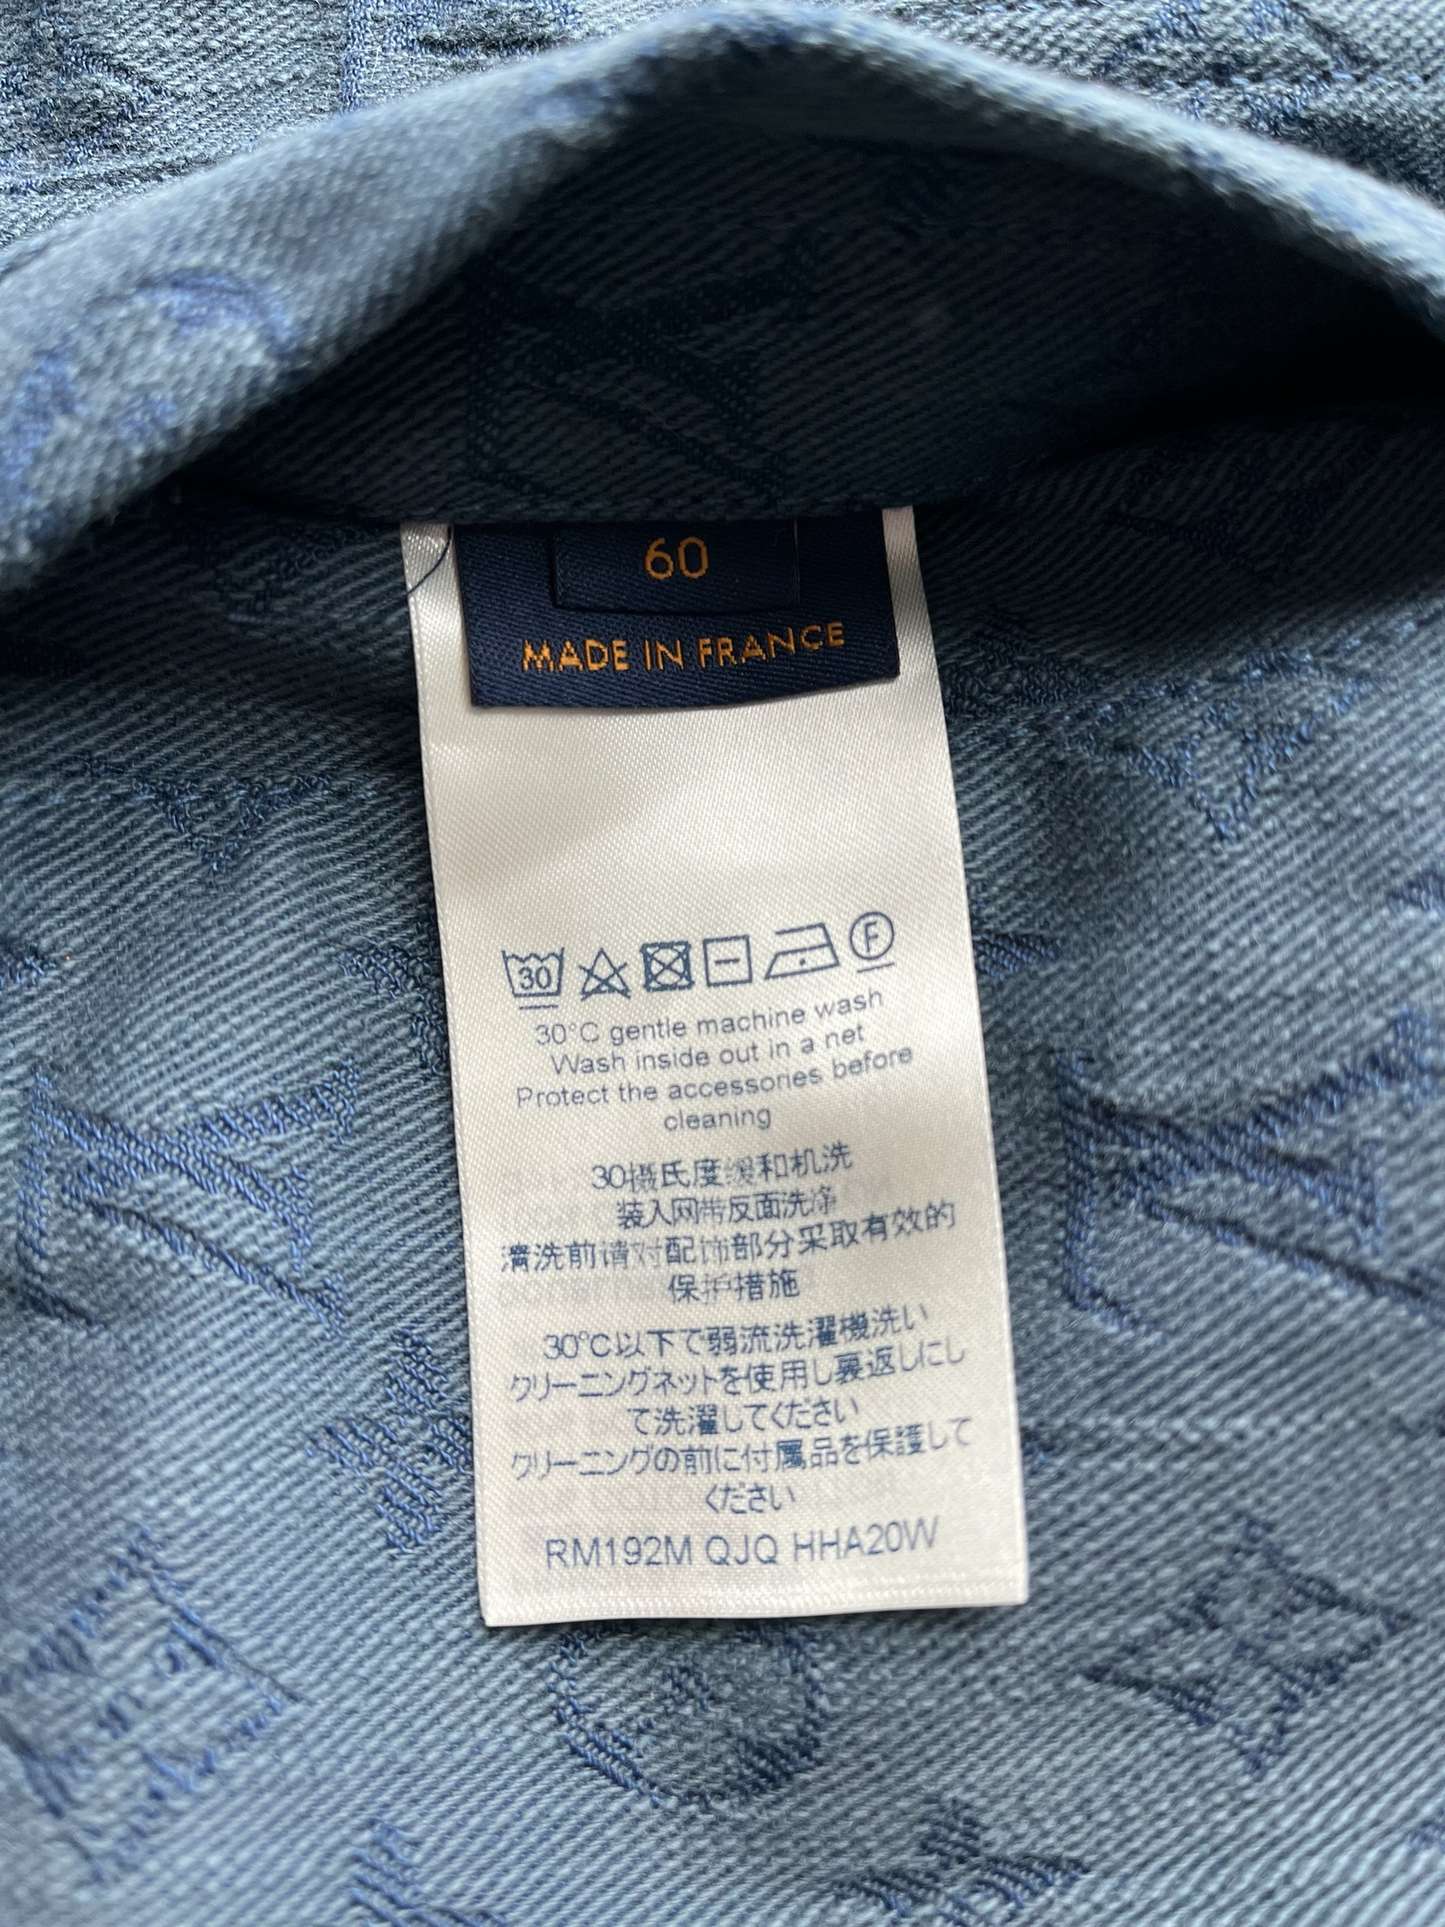 Louis Vuitton Blue Speckled Monogram Workwear Jacket worn by Peso